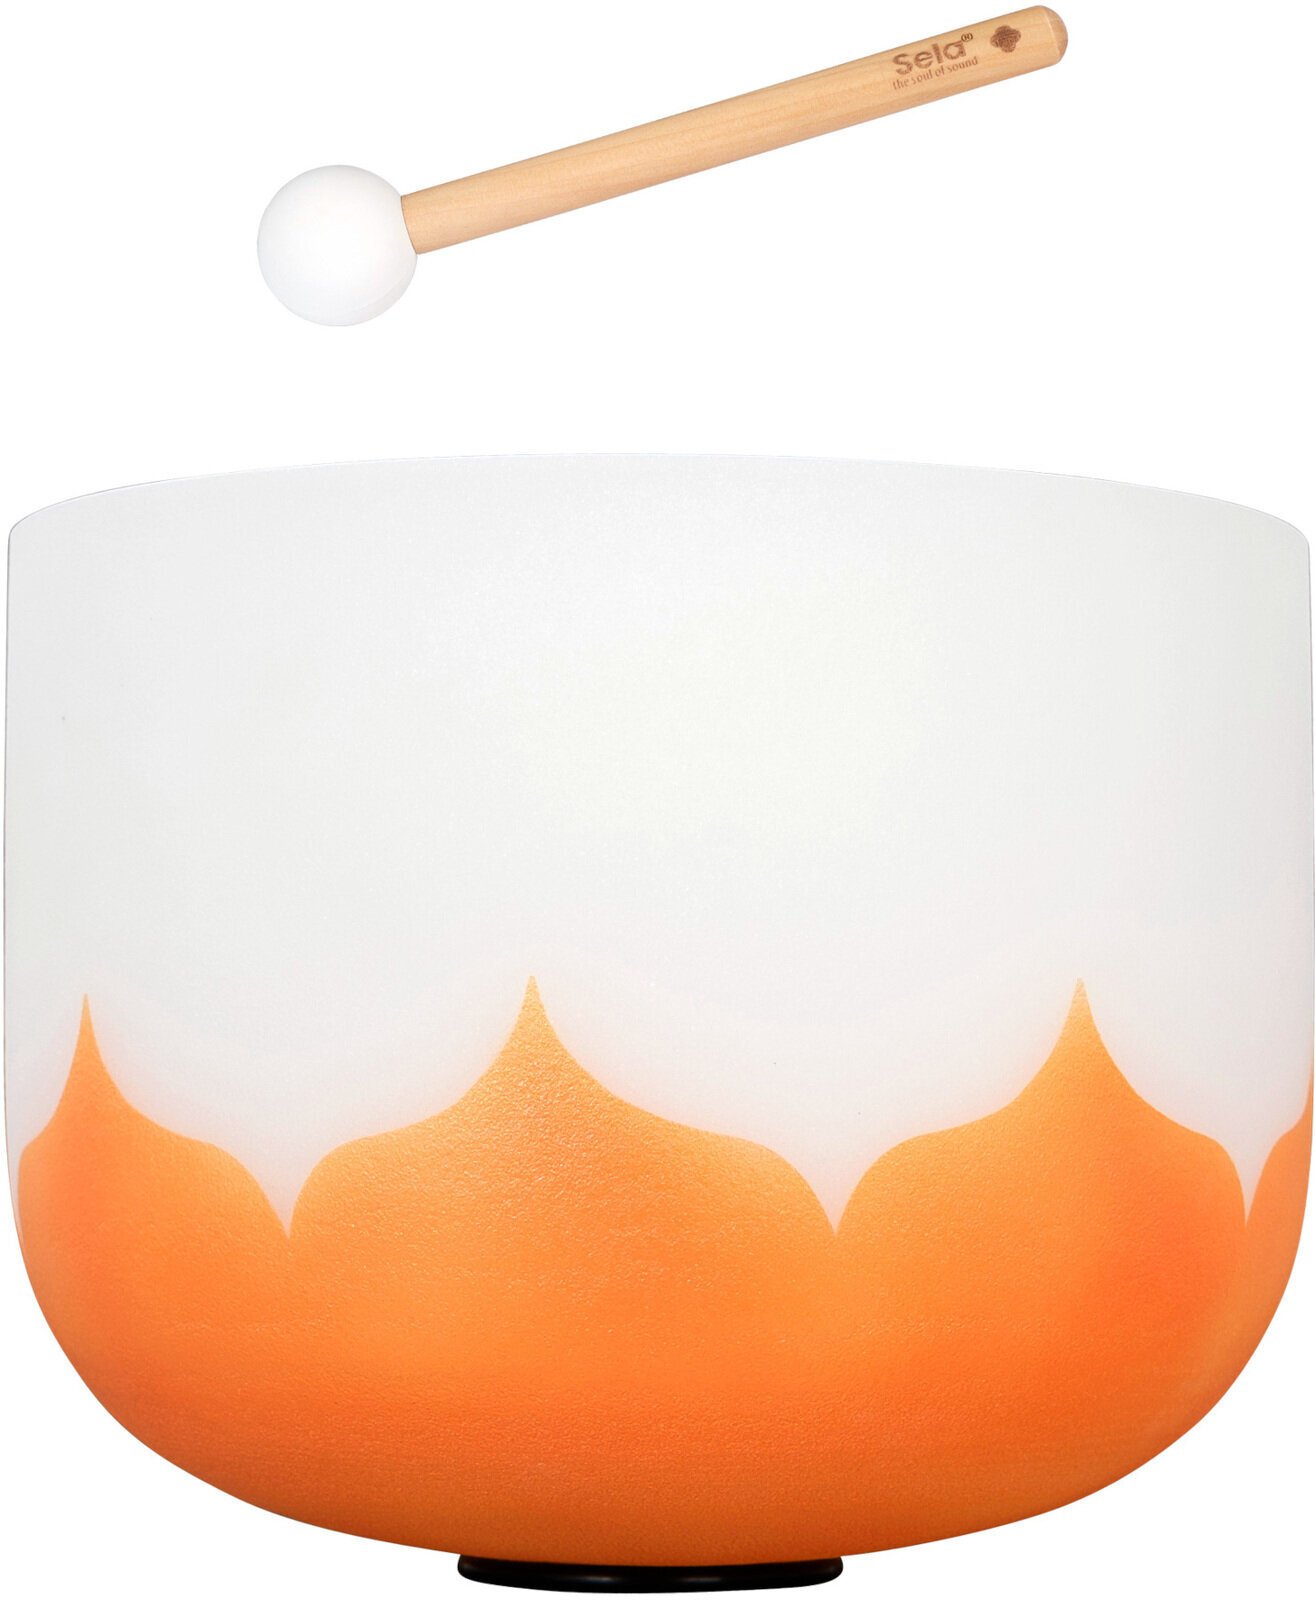 Percussie voor muziektherapie en meditatie Sela 10" Crystal Singing Bowl Lotus 432 Hz D - Orange (Sacral Chakra) incl. 1 Wood Mallet